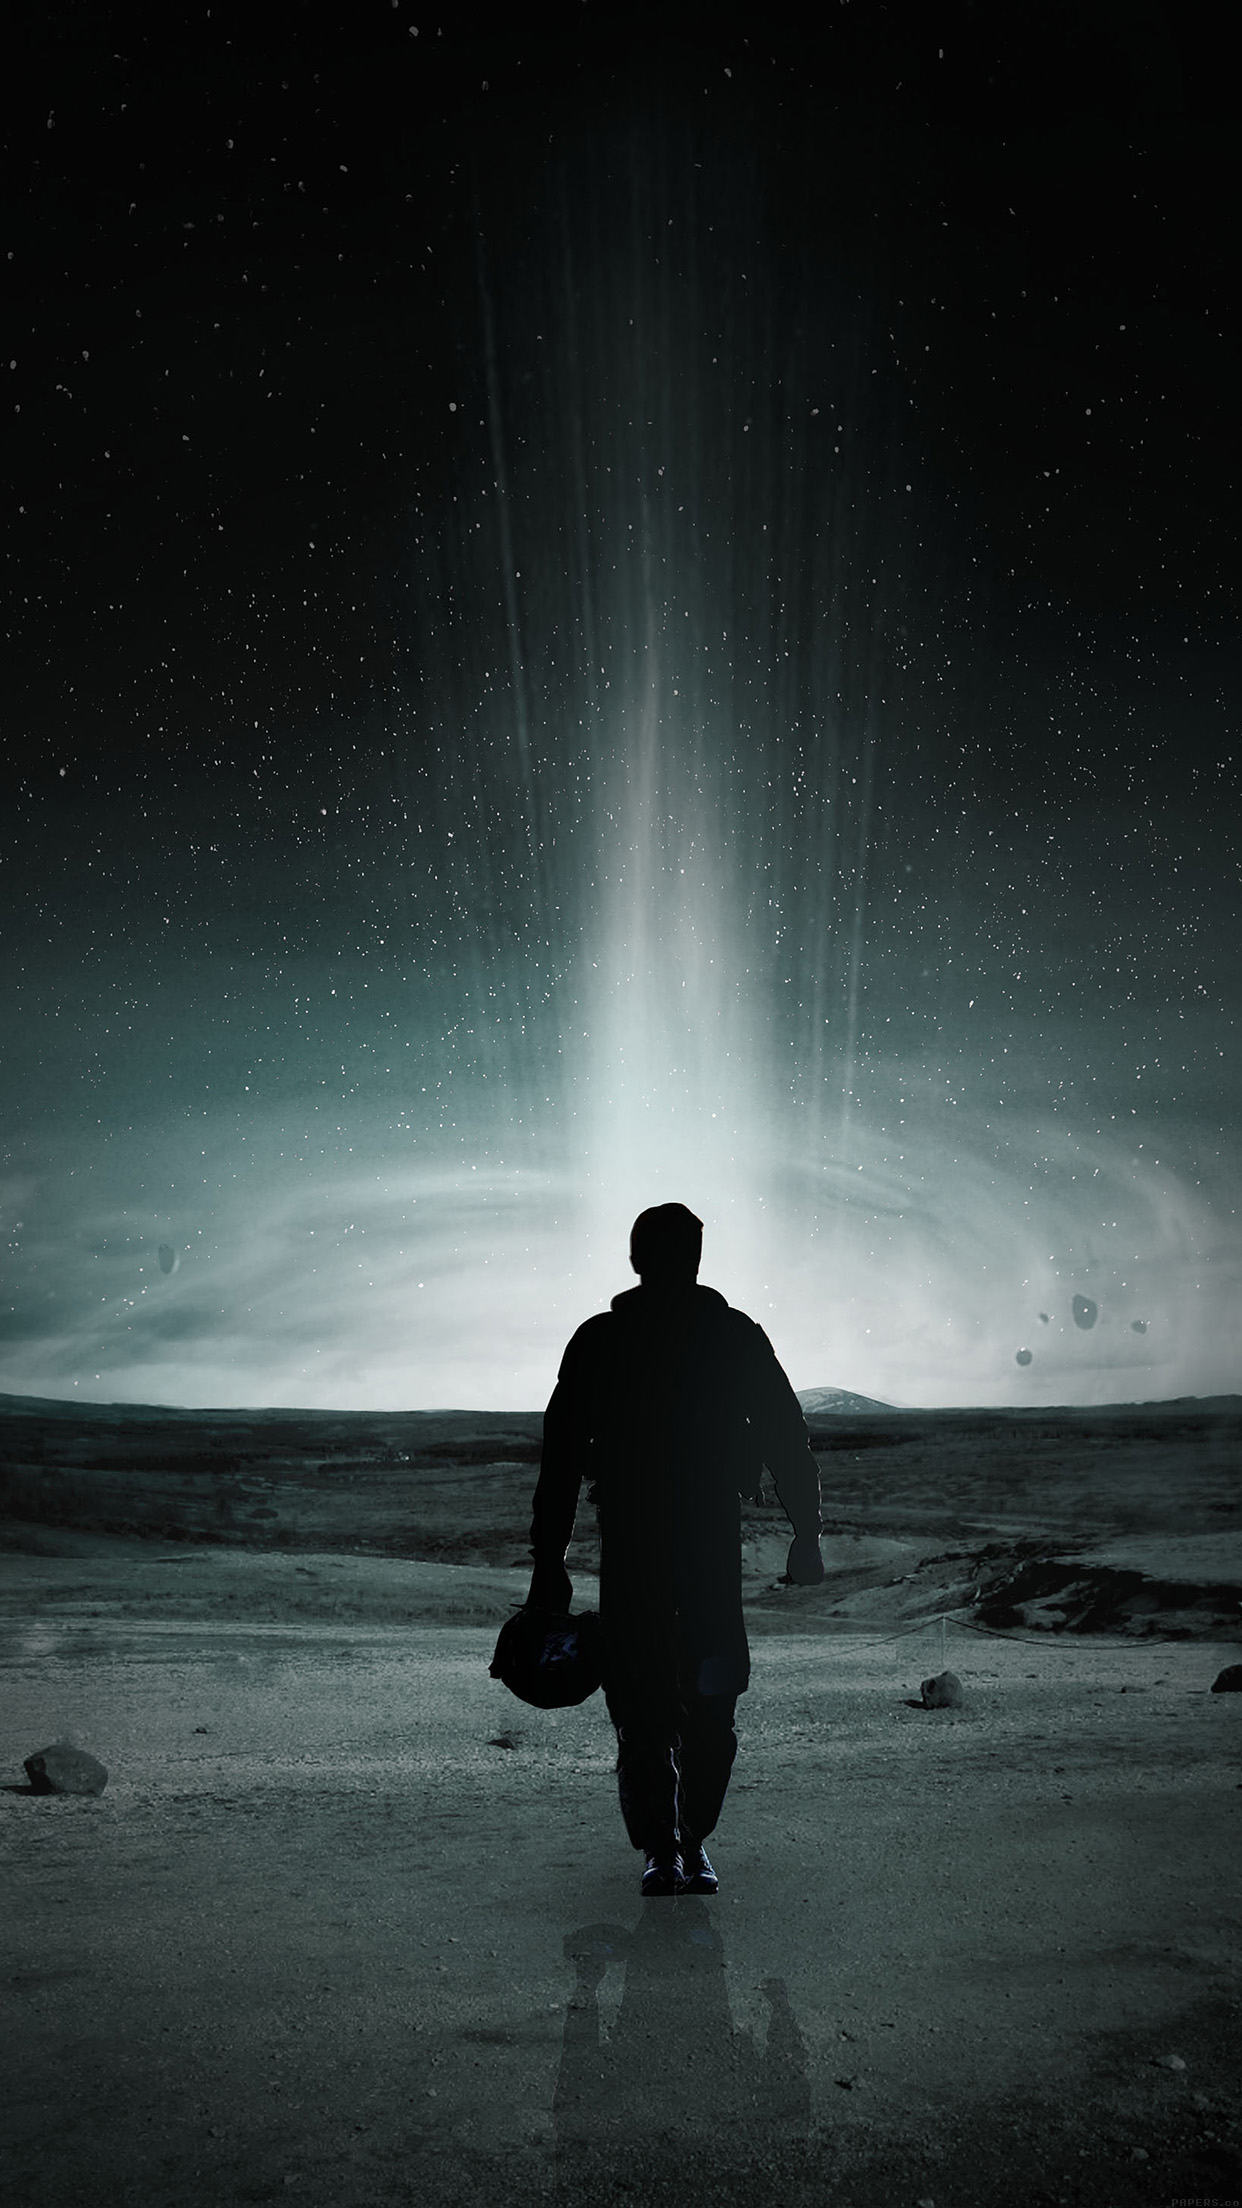 Matthew Mcconaughey Interstellar Space Filme Android wallpaper